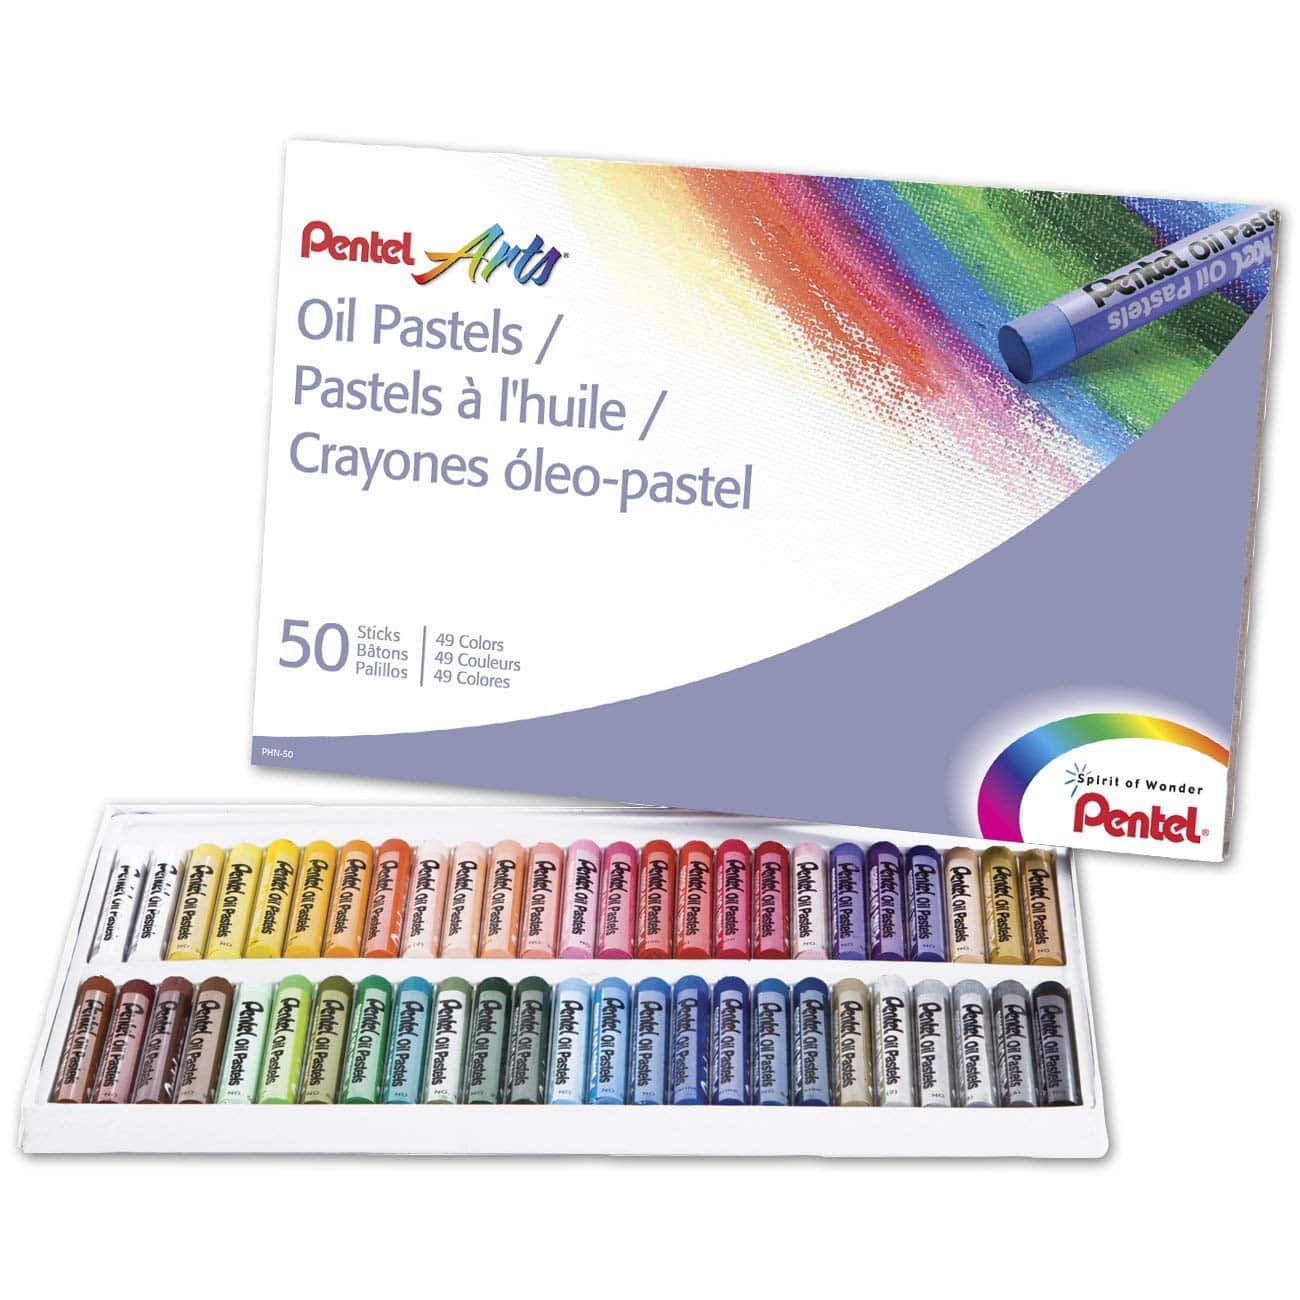 DEAL ALERT: Pentel Arts Oil Pastels, 50 Color Set – 41% off